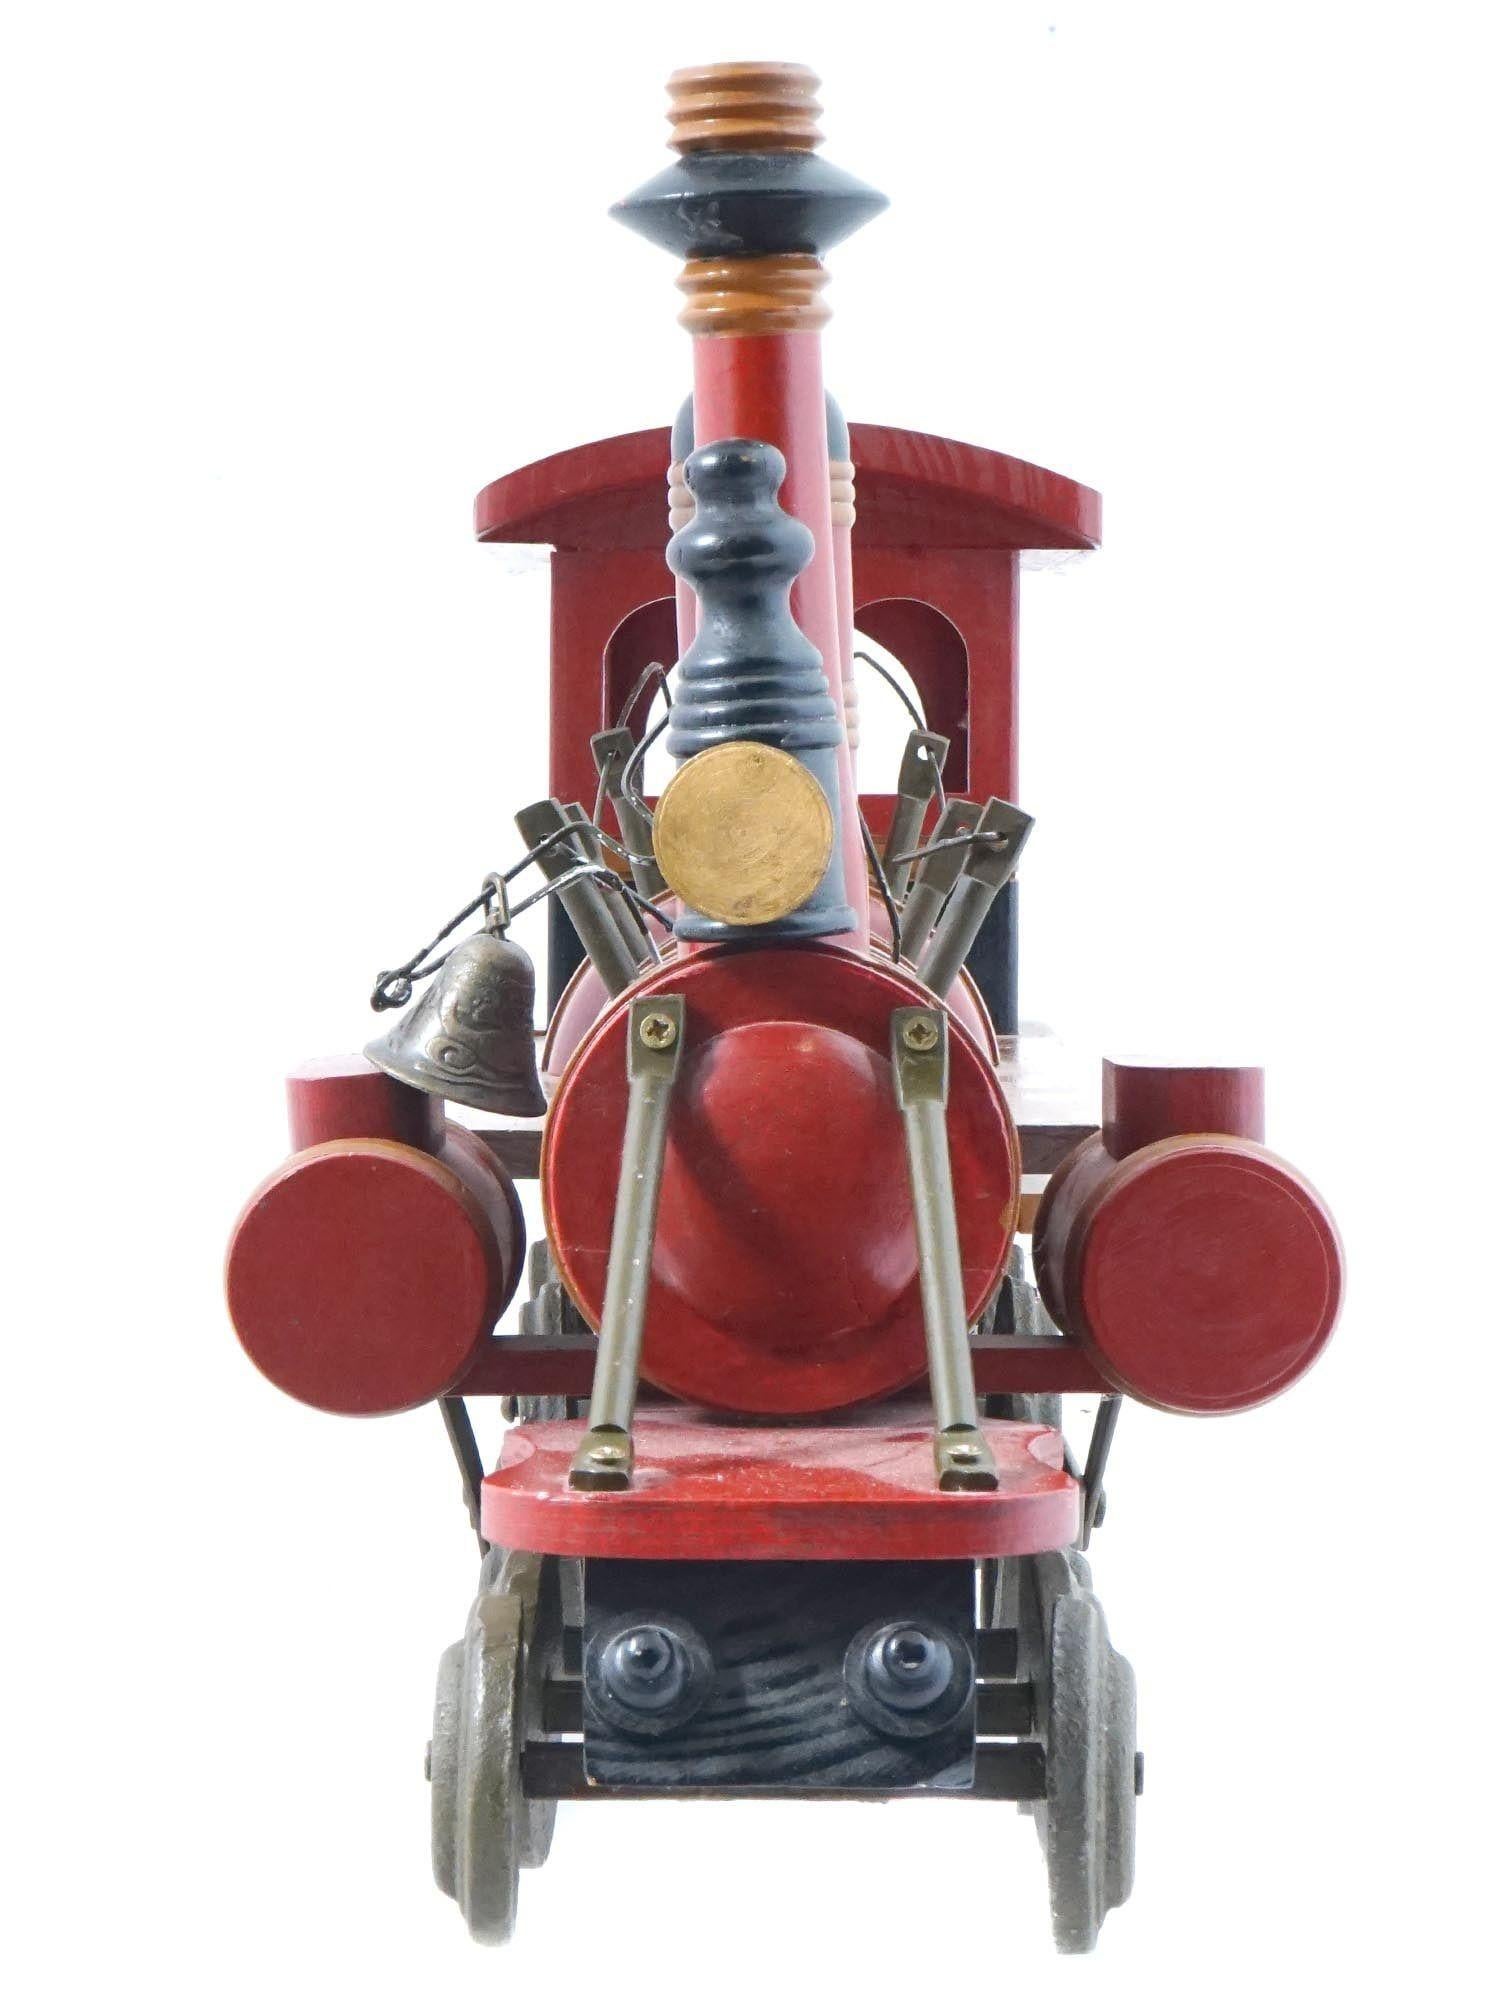 20th Century Large Vintage Locomotive Train Engine Toy For Sale